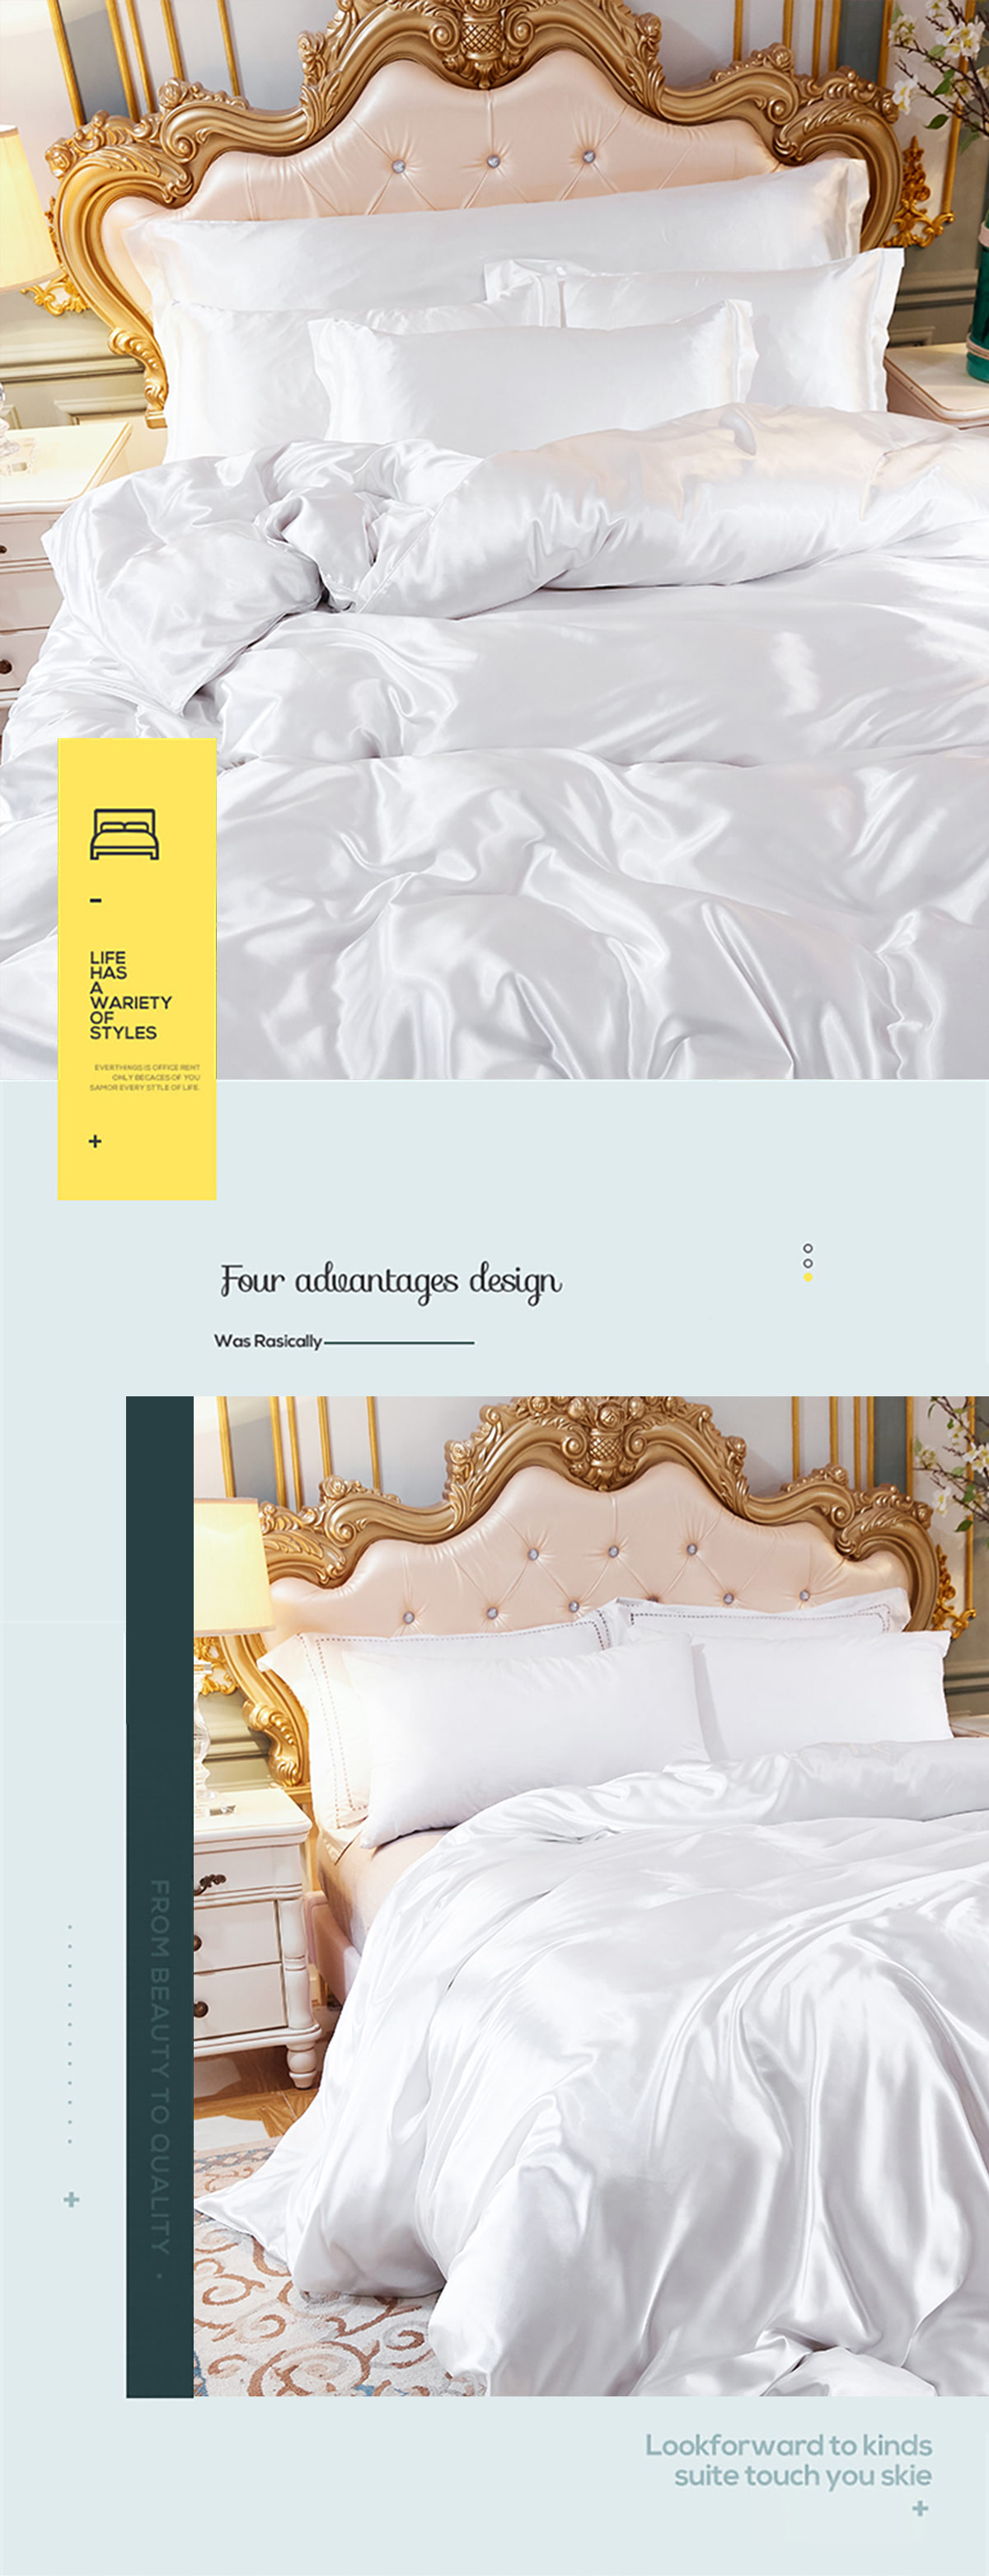 Home-Textile-Simple-Satin-Bedding-Set-Quilt-Cover-Pillowcases18.jpg